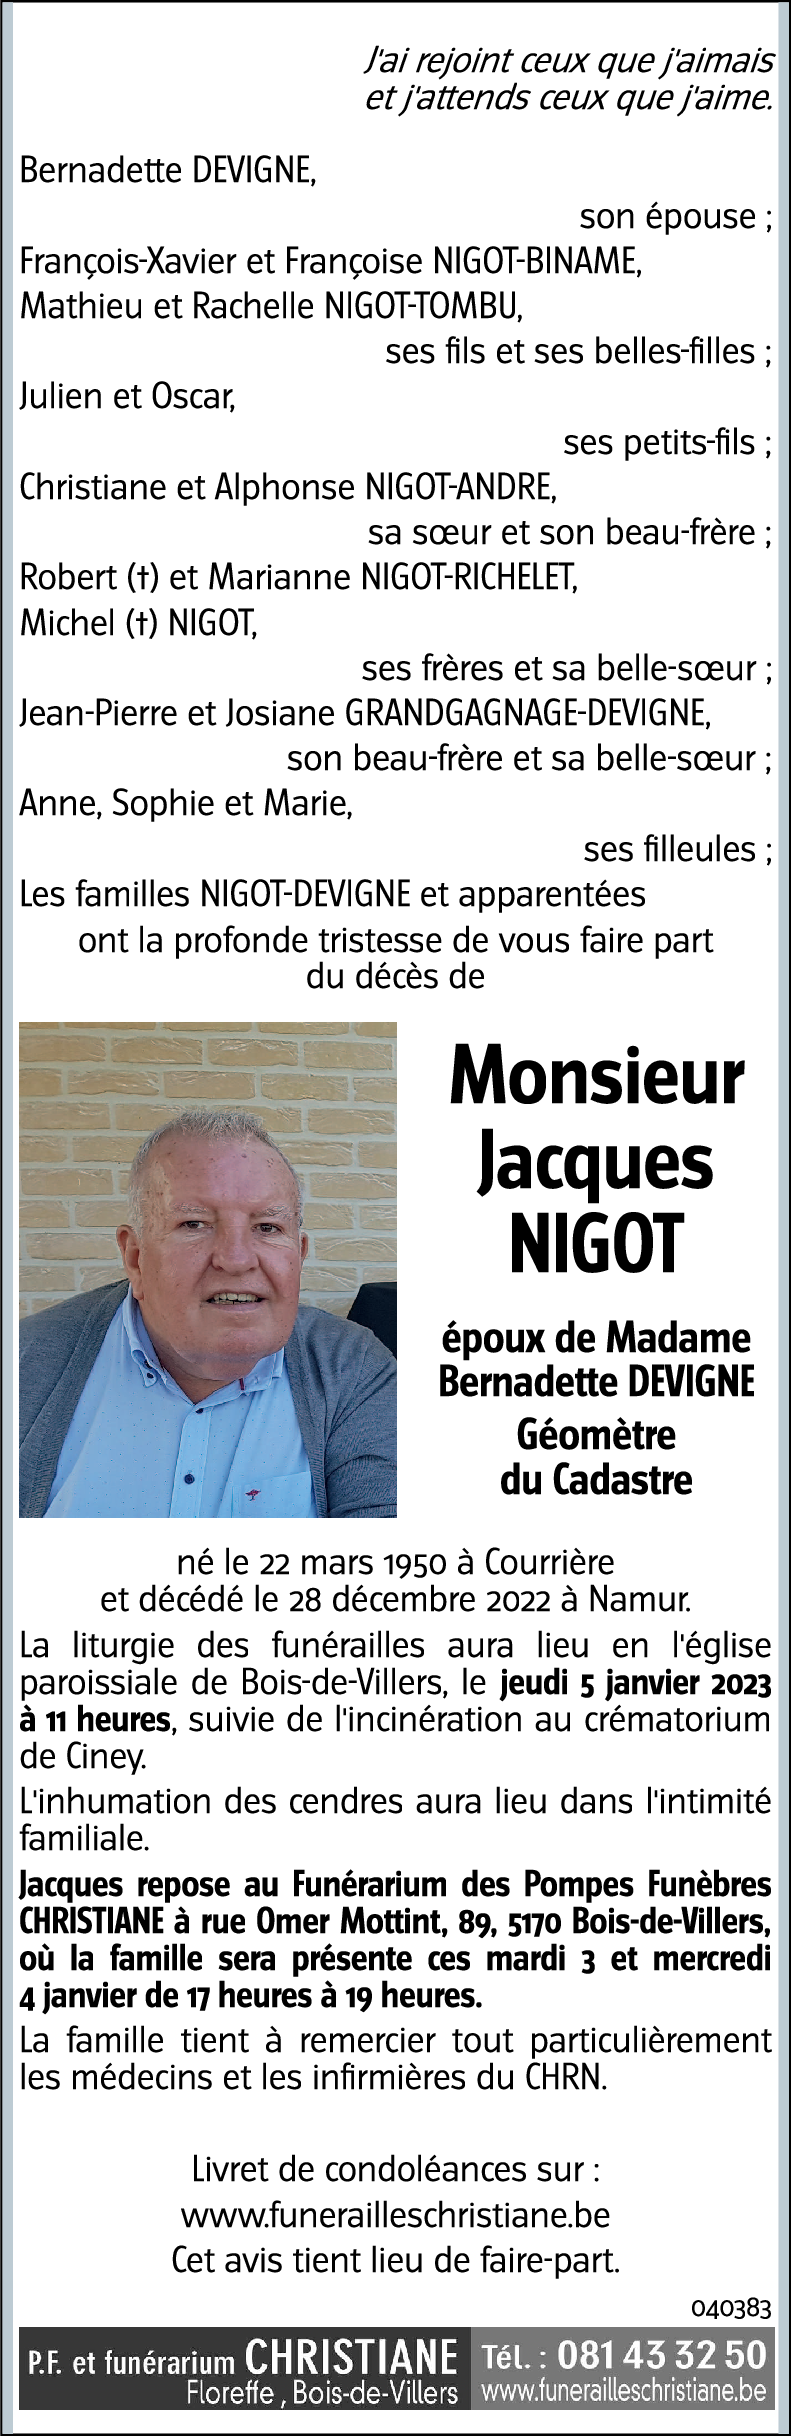 Jacques NIGOT